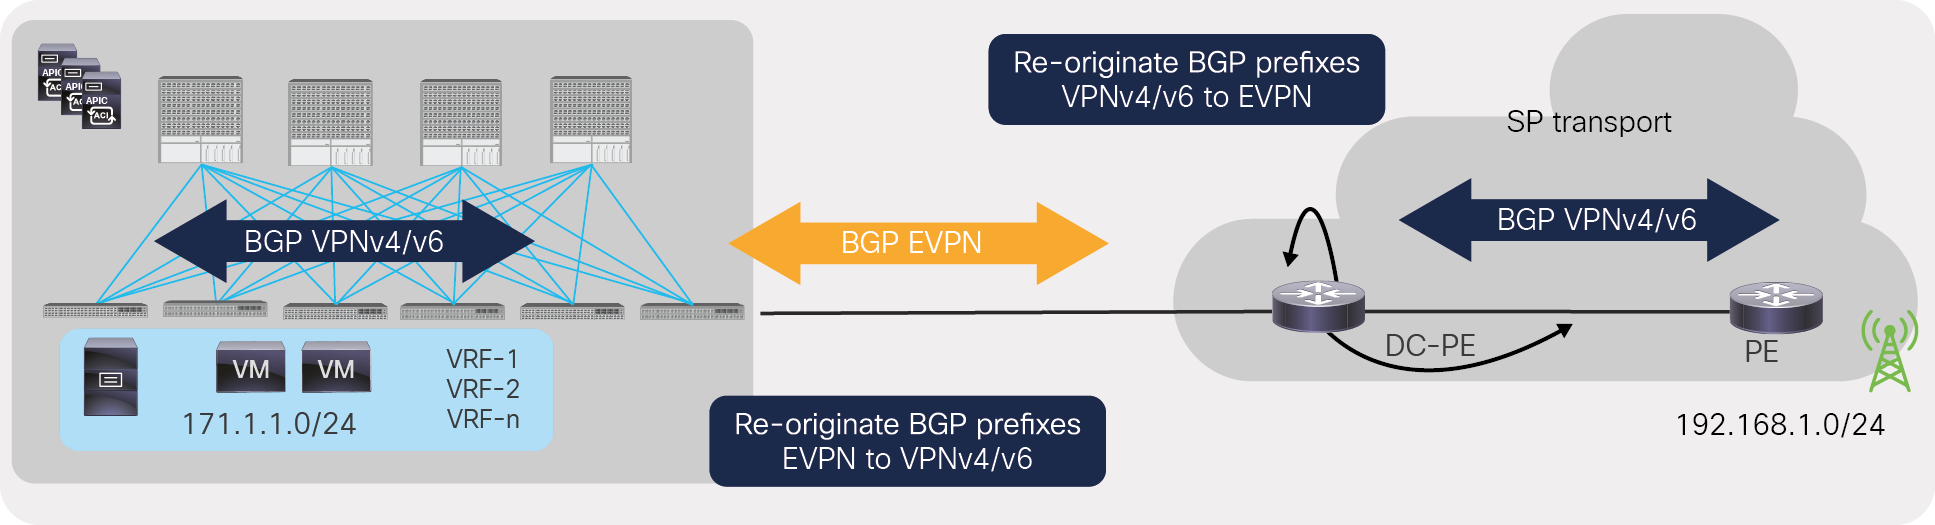 Re-originate BGP EVPN to VPNv4/v6, and VPNv4/v6 to EVPN prefixes on DC-PE